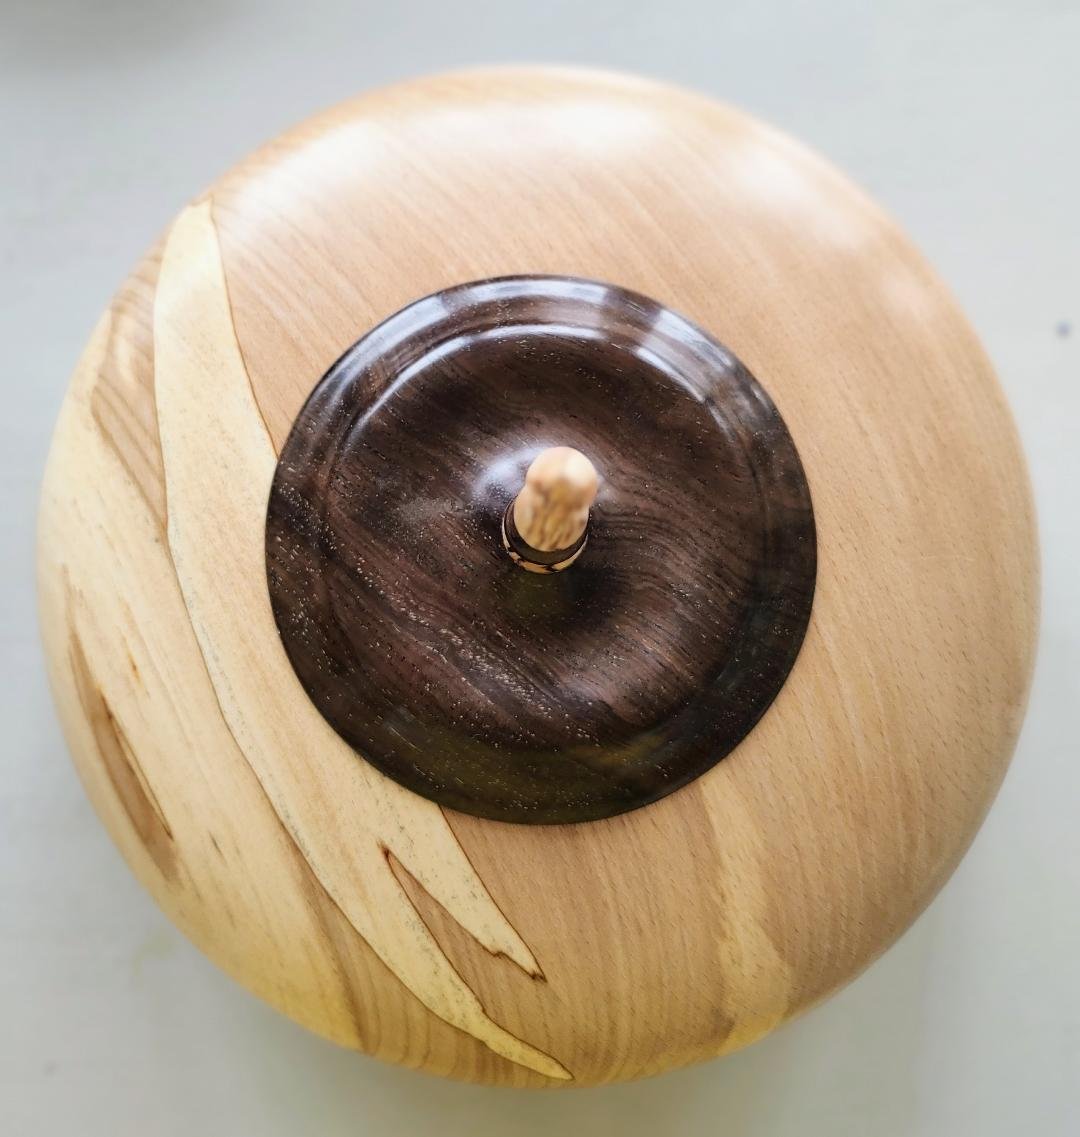 Andy Harris- Turned Wooden Arabian Style Ldded Bowl